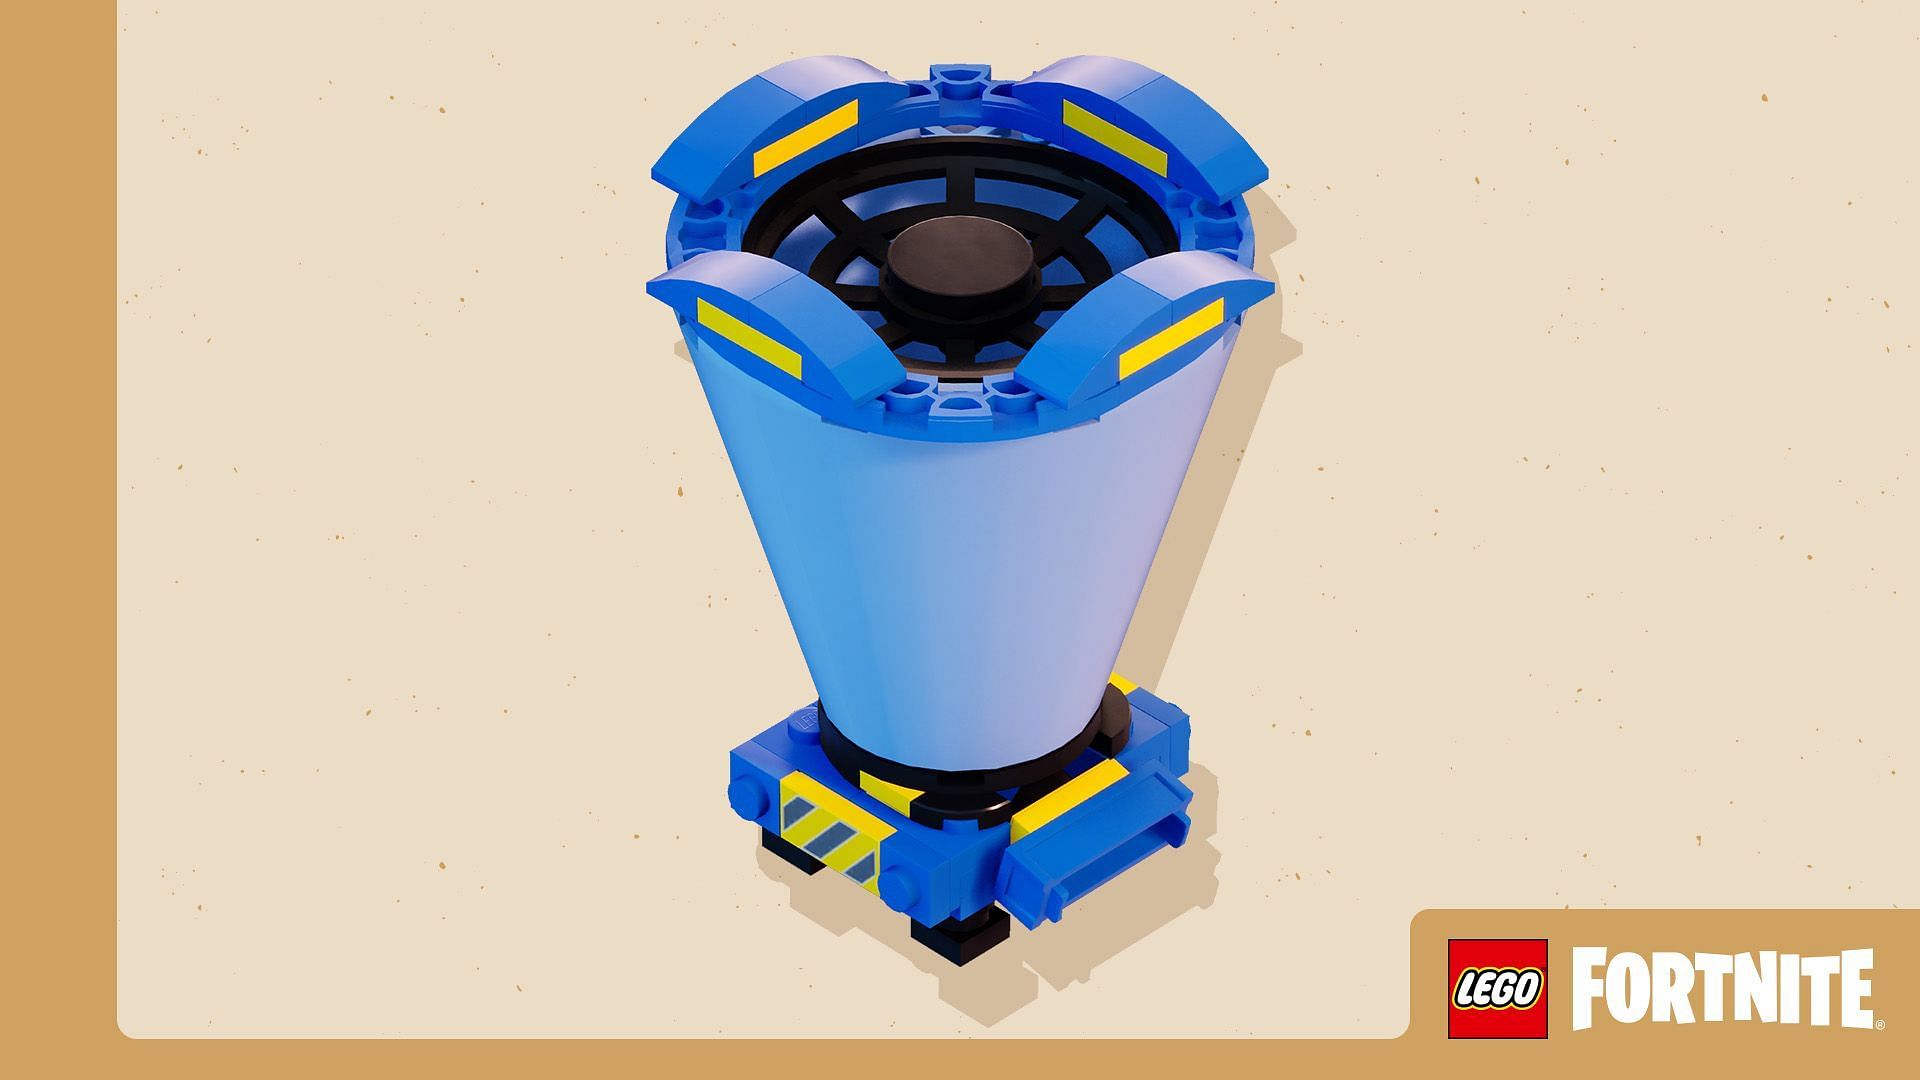 Food Processor is a game changer in LEGO Fortnite (Image via Epic Games/LEGO Fortnite)